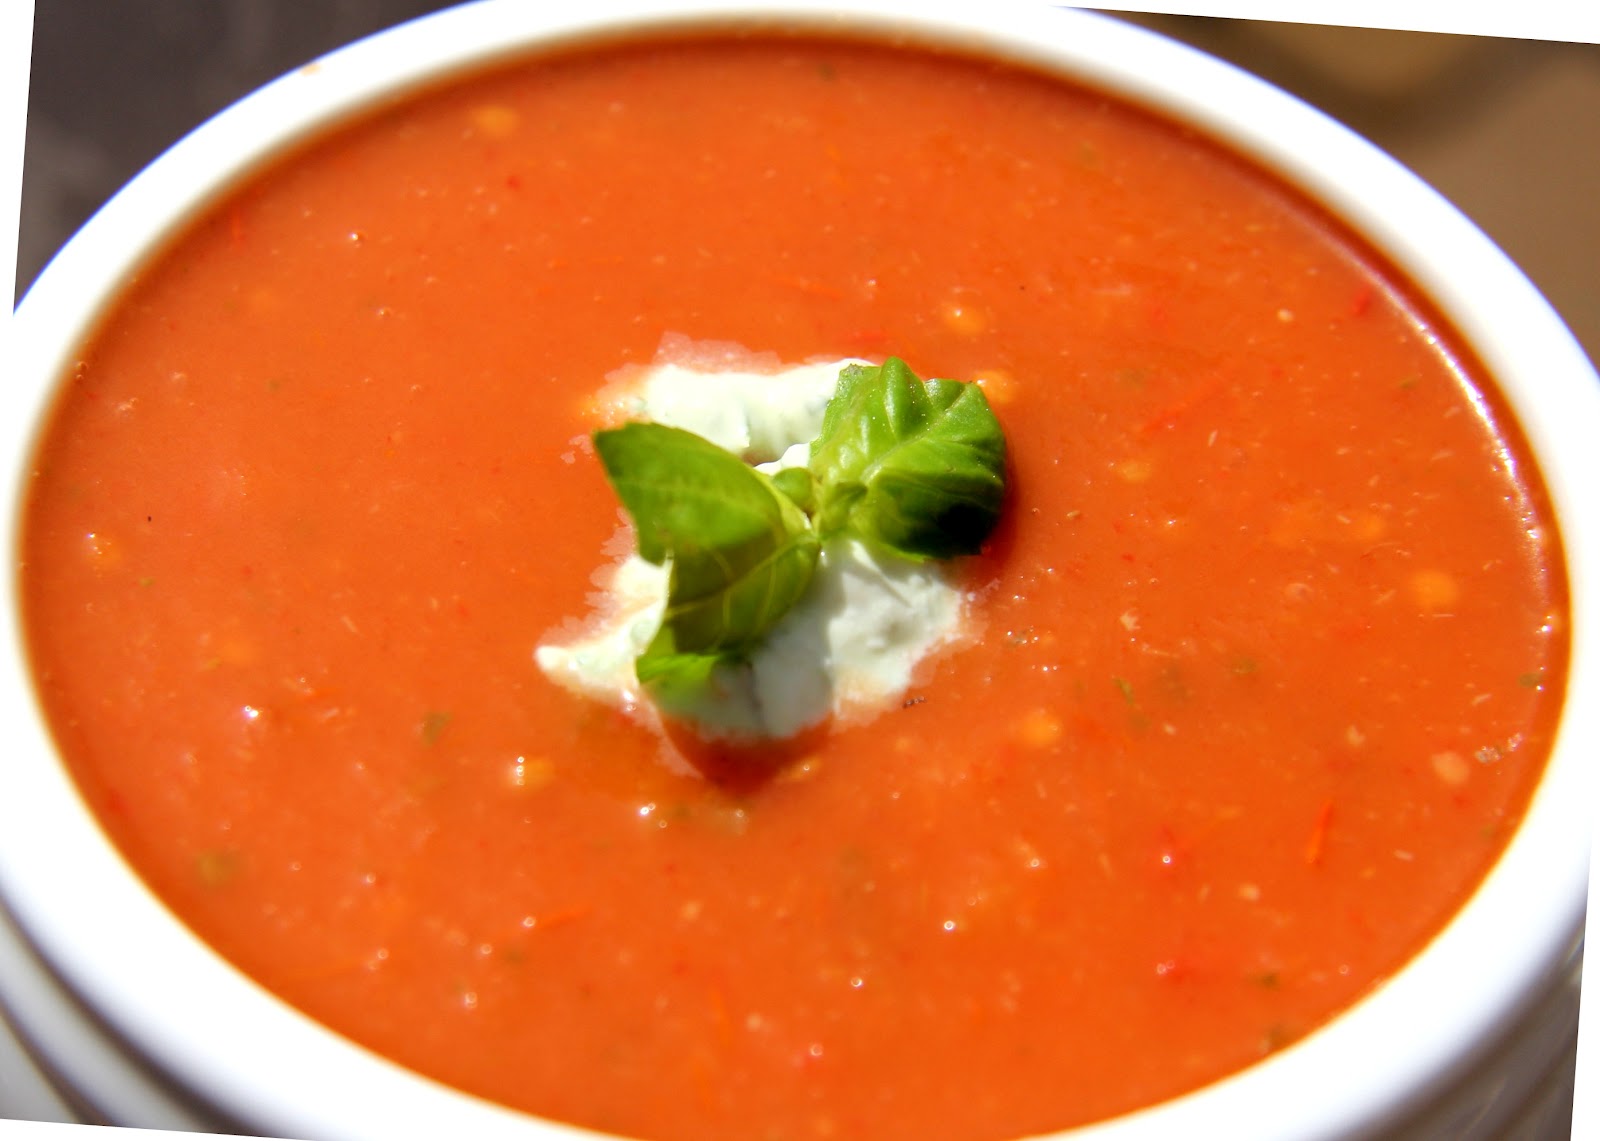 http://4.bp.blogspot.com/-pAviR3FYc54/T8DZ9CcXP0I/AAAAAAAAA_8/5NjKmA1hkYs/s1600/tomato-basil-soup-chef-duminda.jpg